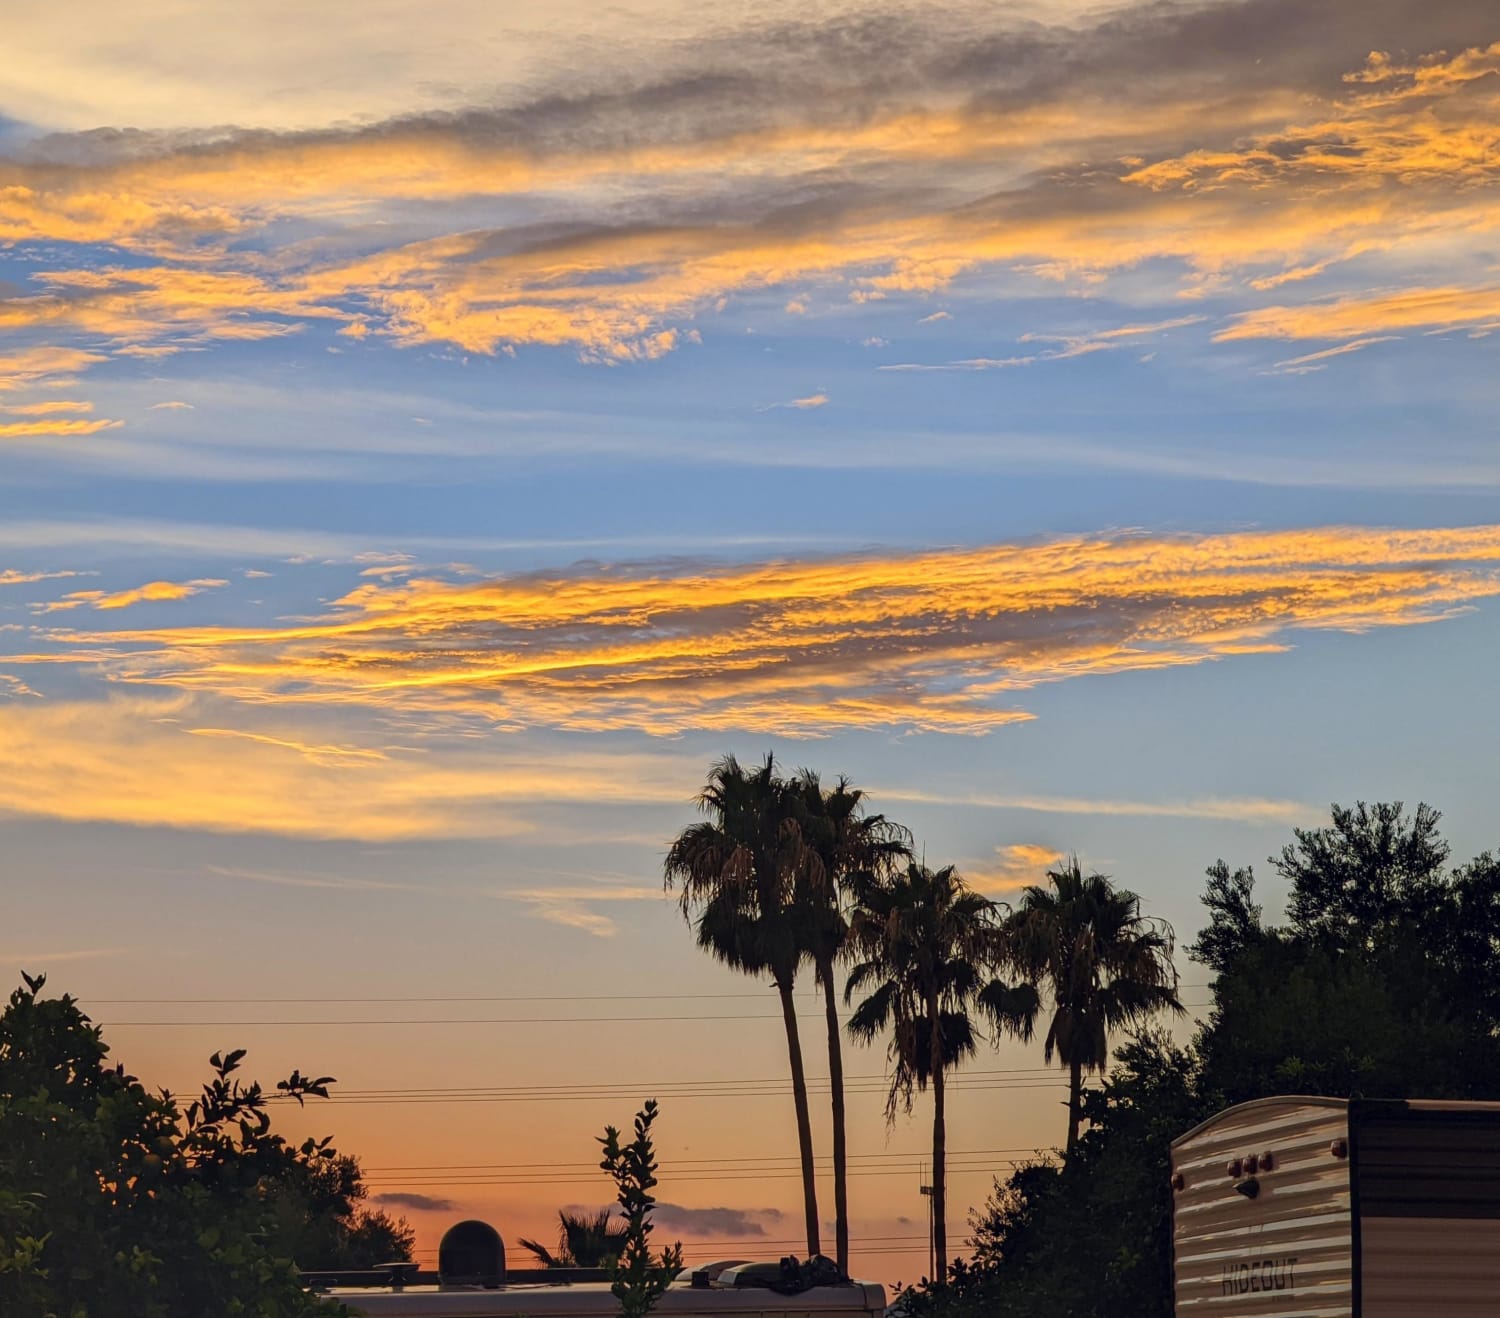 Sunset over the Tucson KOA.